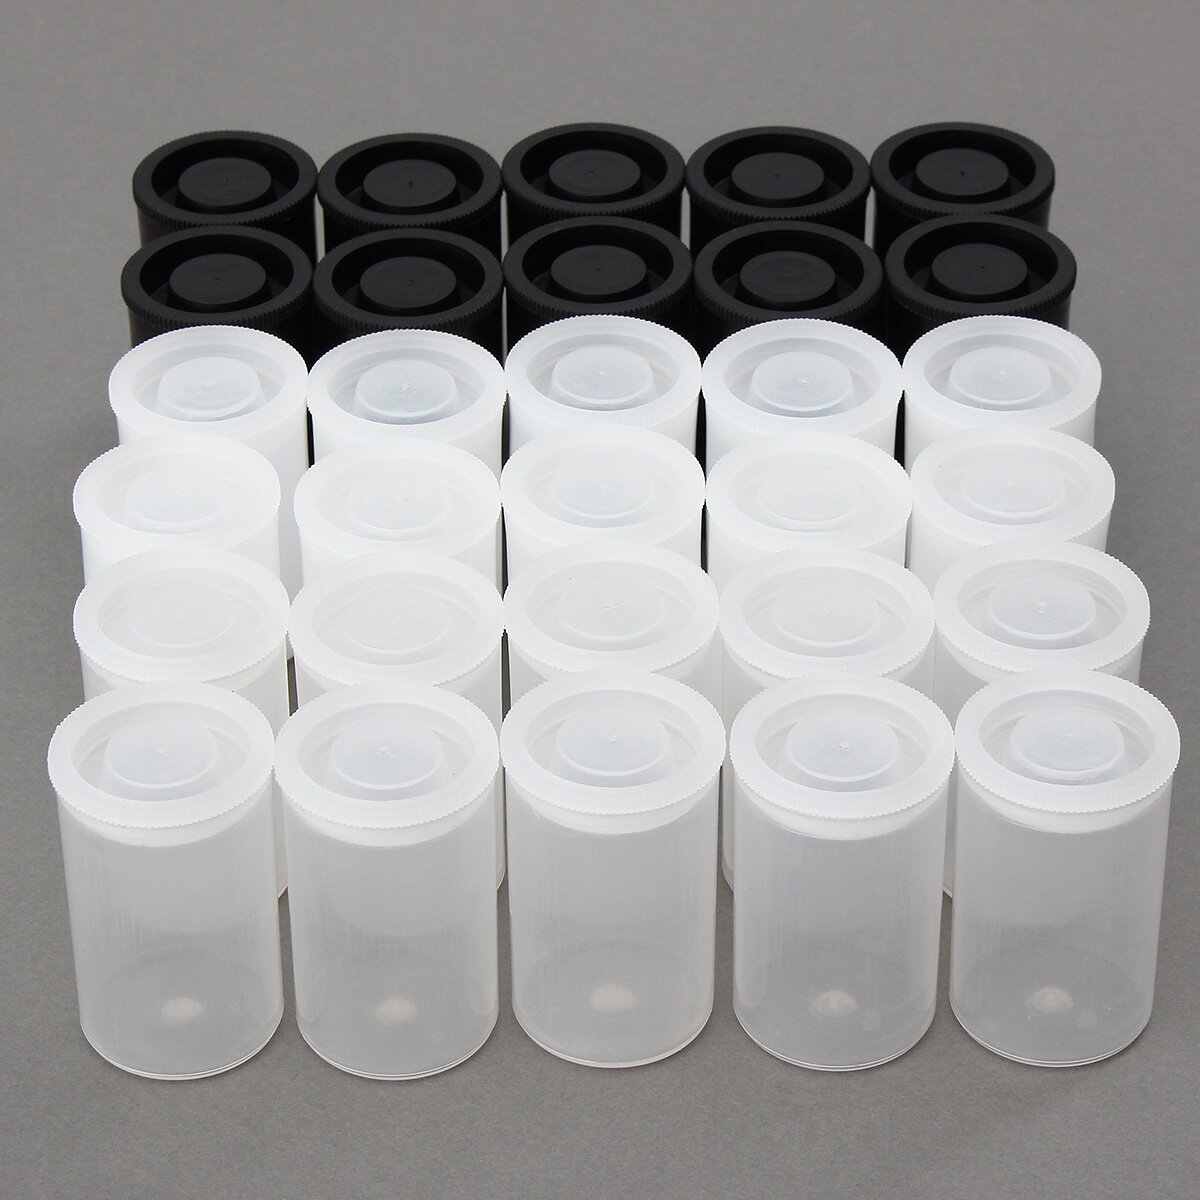 10st lege zwarte witte fles 35mm film blikjes bussen containers voor Kodak Fuji